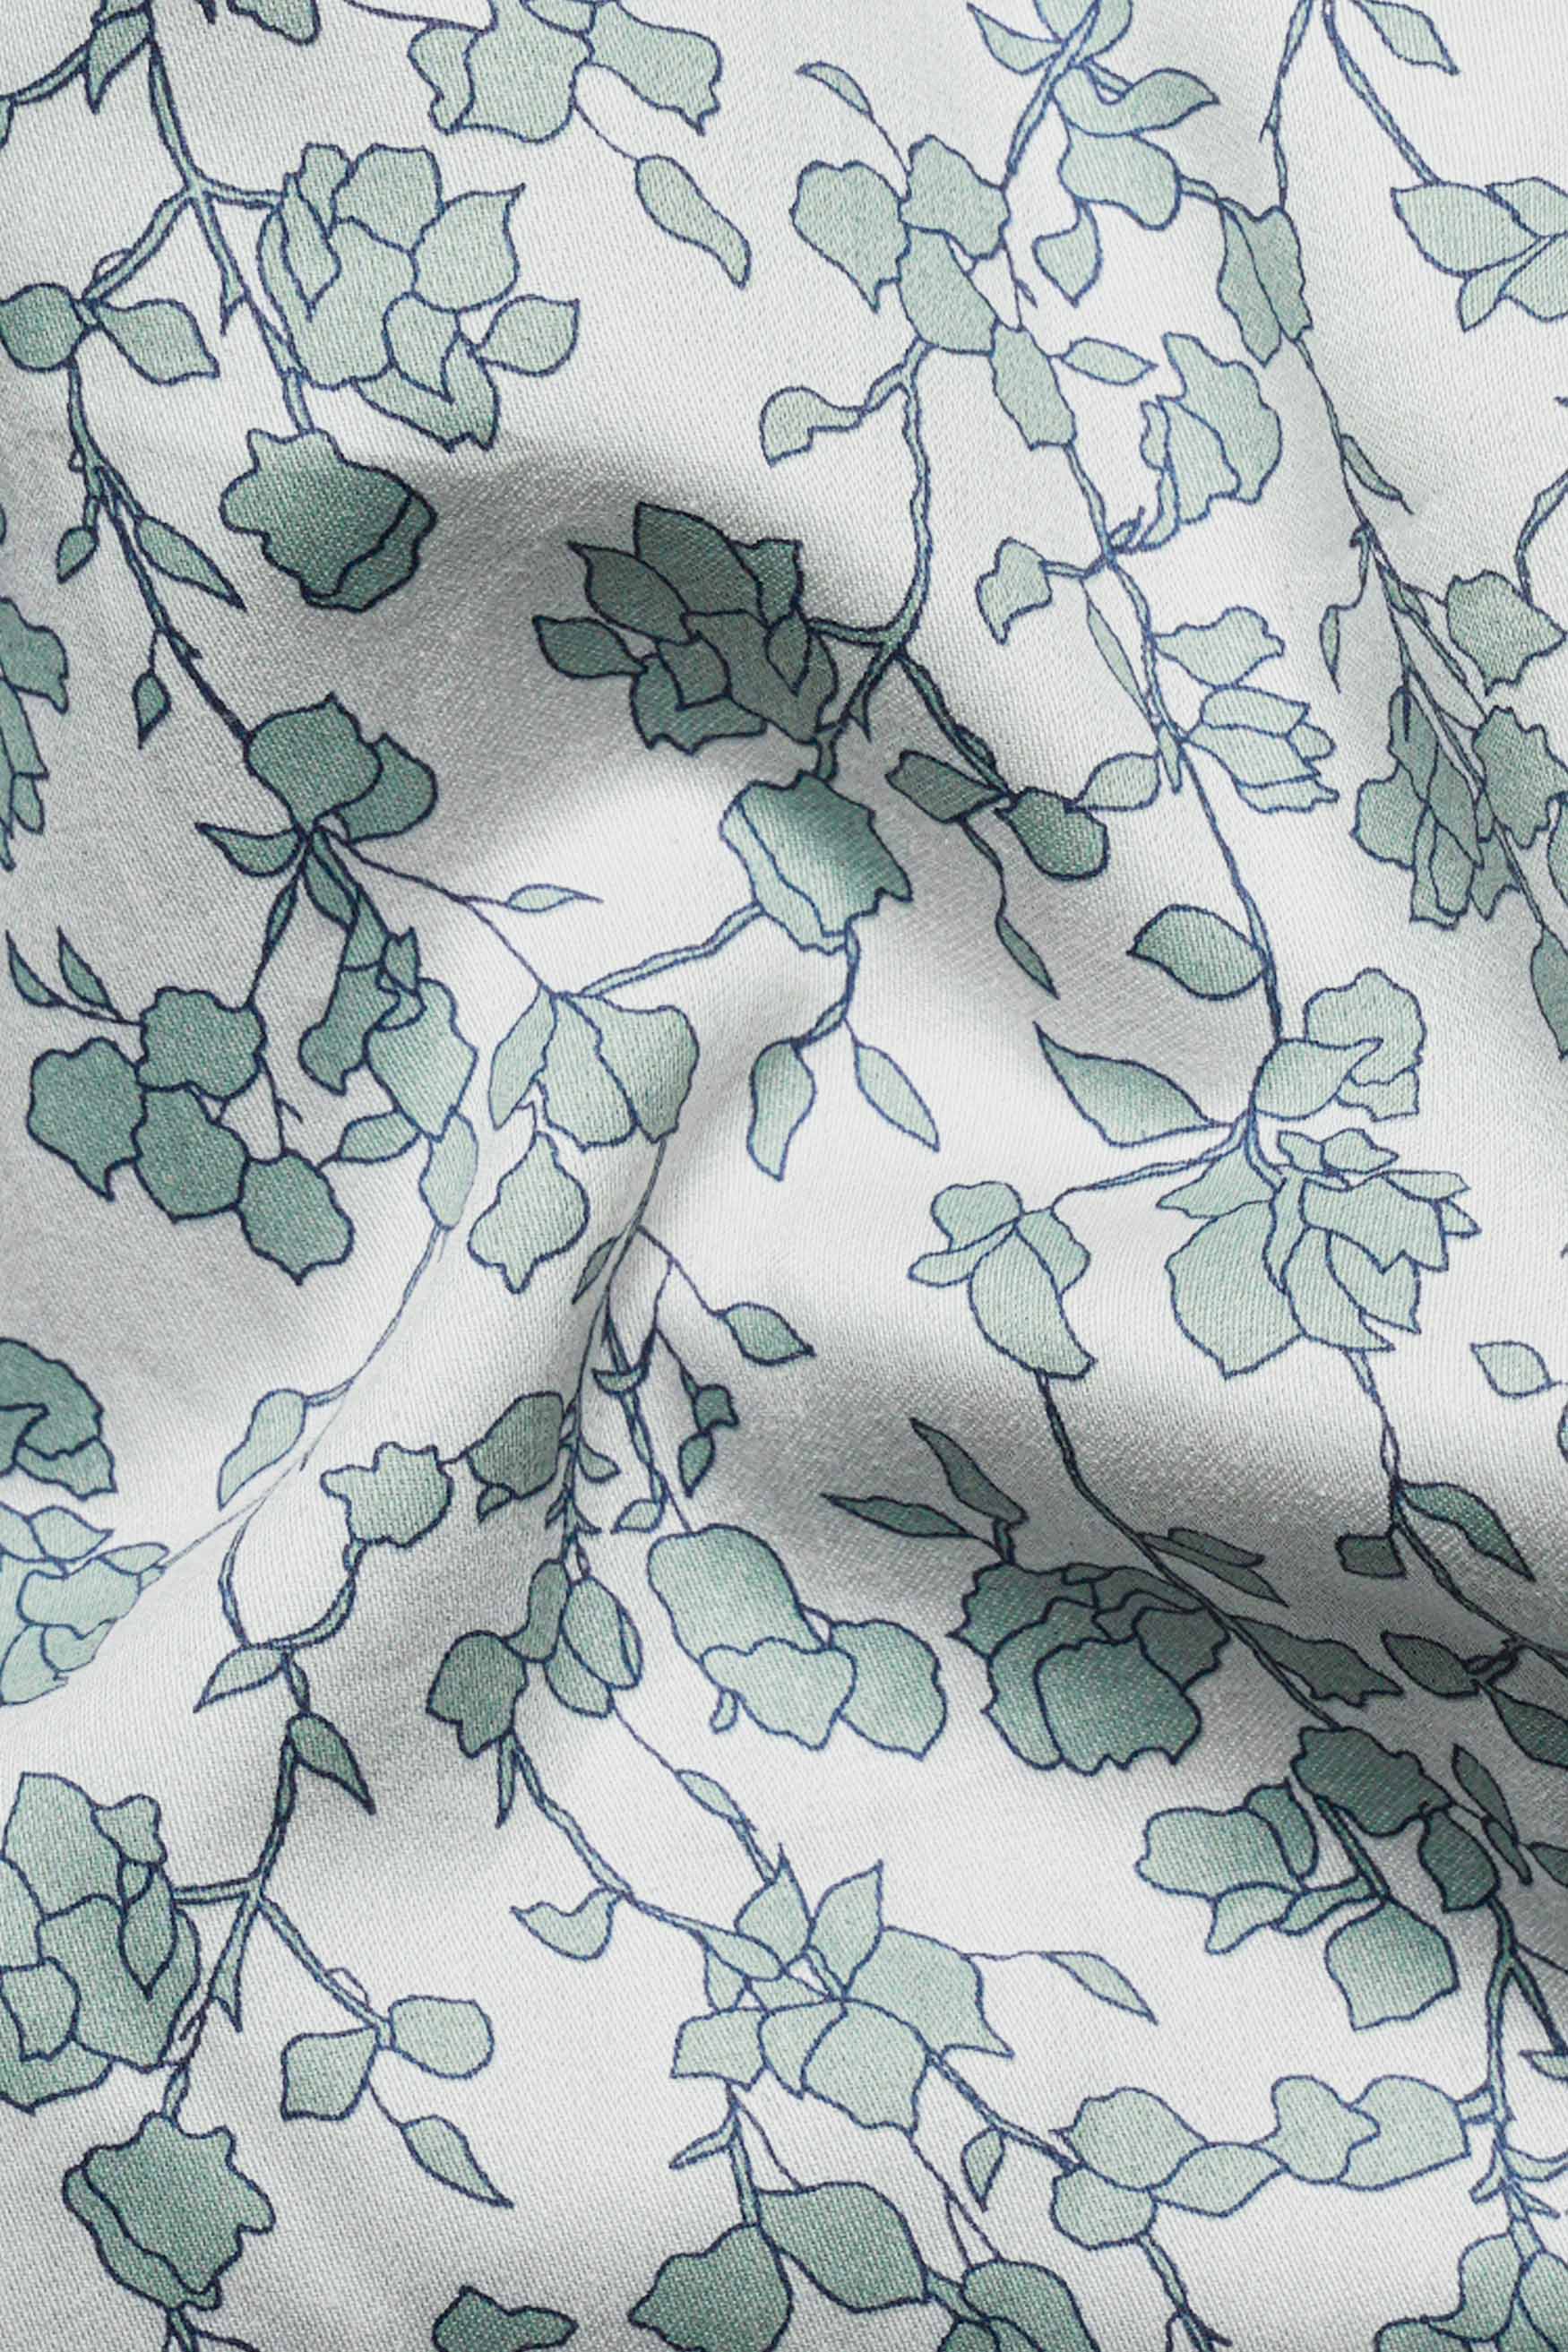 Gainsboro Gray and Tiara Green Leaves Printed with Taj Mahal Embroidered Super Soft Premium Cotton Designer Shirt 6195-M-E184-38, 6195-M-E184-H-38, 6195-M-E184-39, 6195-M-E184-H-39, 6195-M-E184-40, 6195-M-E184-H-40, 6195-M-E184-42, 6195-M-E184-H-42, 6195-M-E184-44, 6195-M-E184-H-44, 6195-M-E184-46, 6195-M-E184-H-46, 6195-M-E184-48, 6195-M-E184-H-48, 6195-M-E184-50, 6195-M-E184-H-50, 6195-M-E184-52, 6195-M-E184-H-52